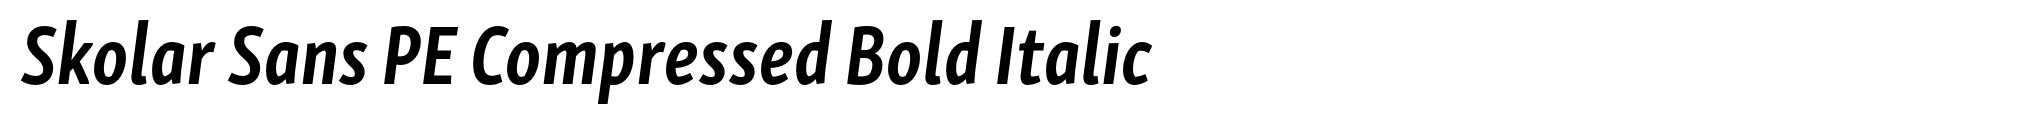 Skolar Sans PE Compressed Bold Italic image